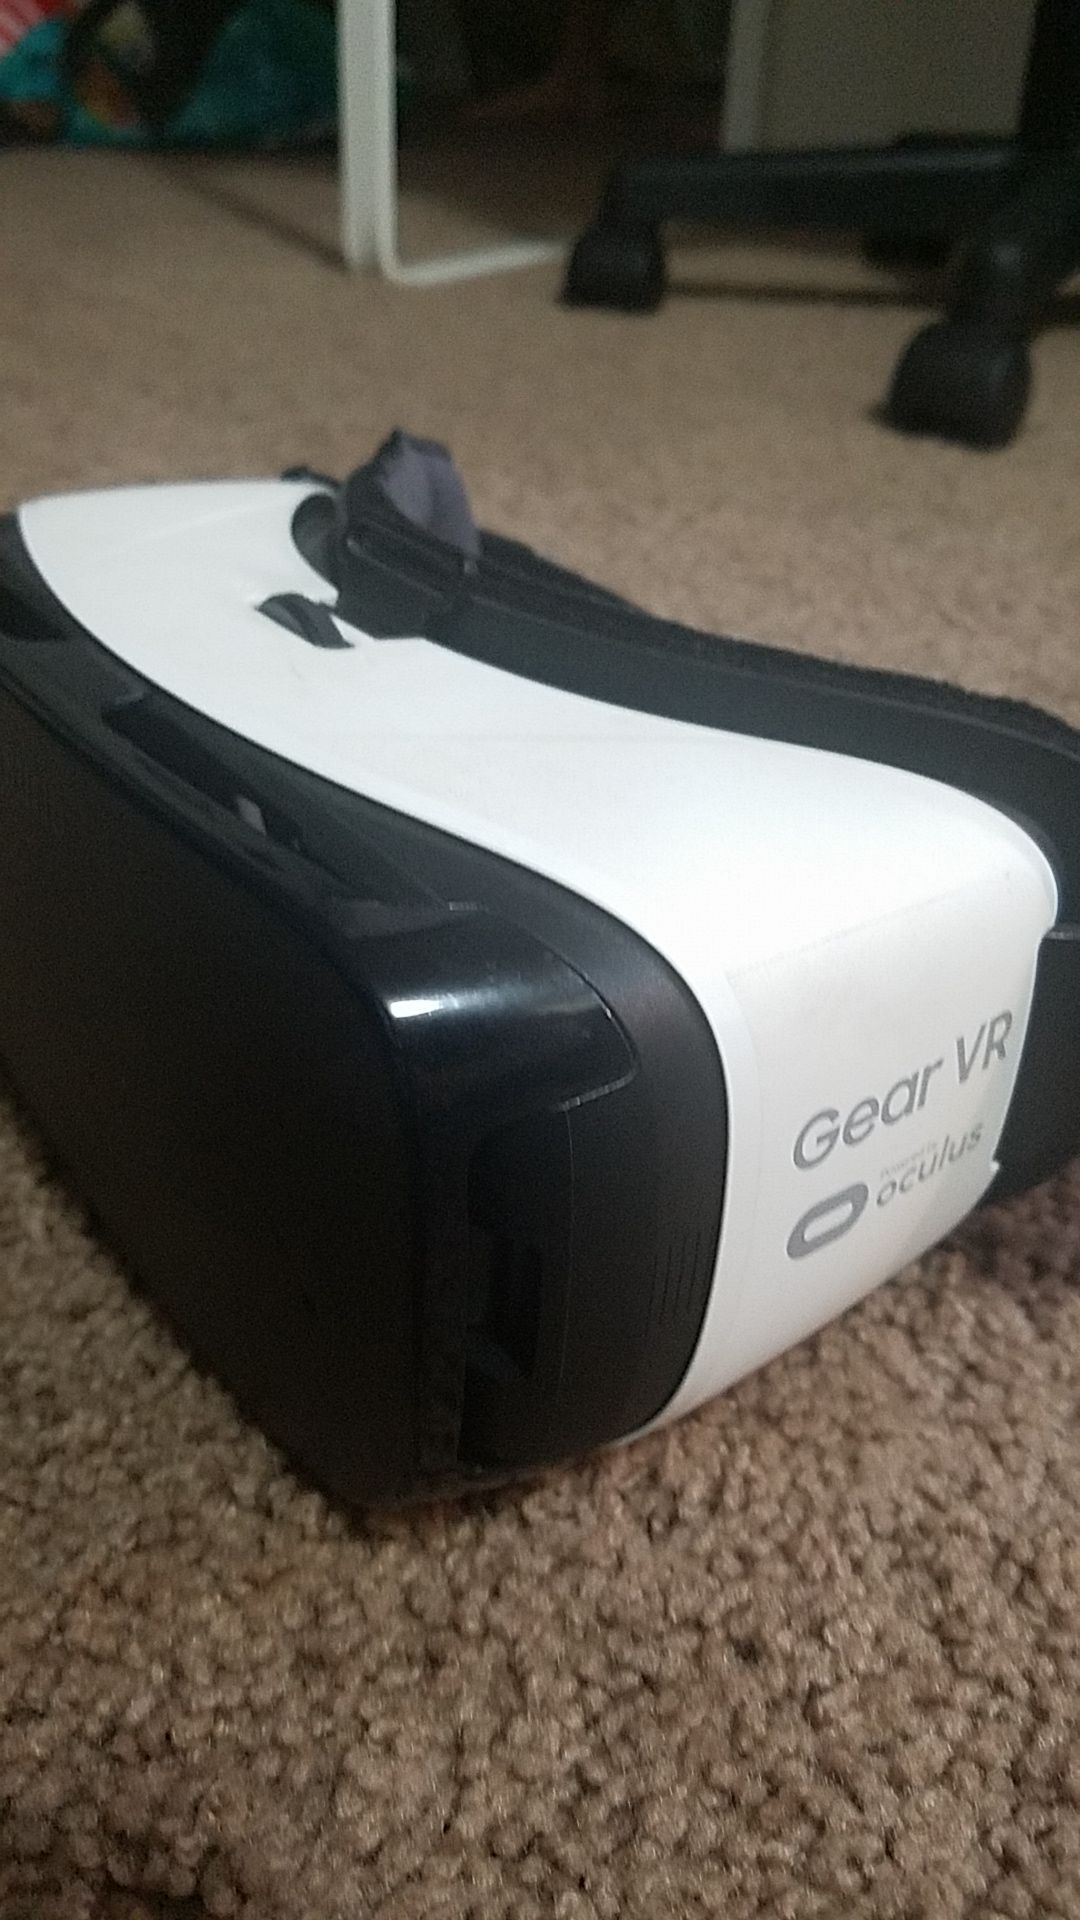 Samsung Gear VR headset